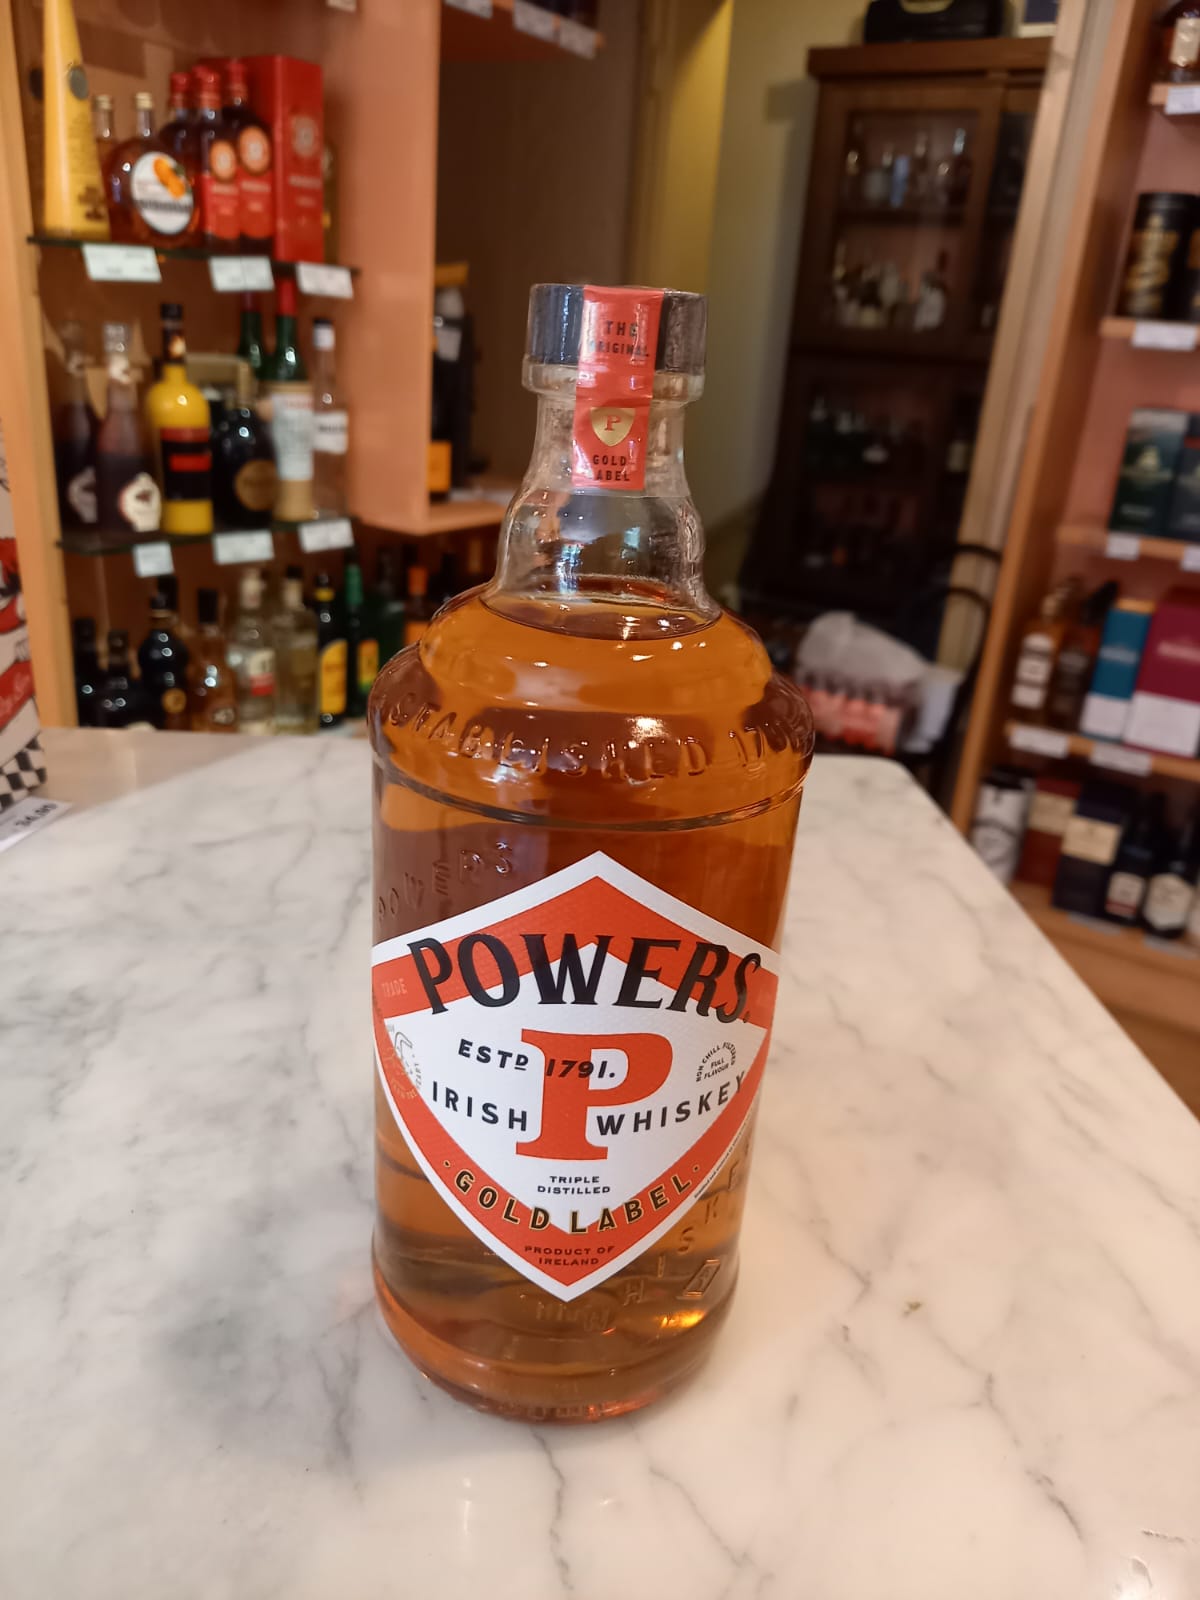 John Power's Gold Label Irish Whisky